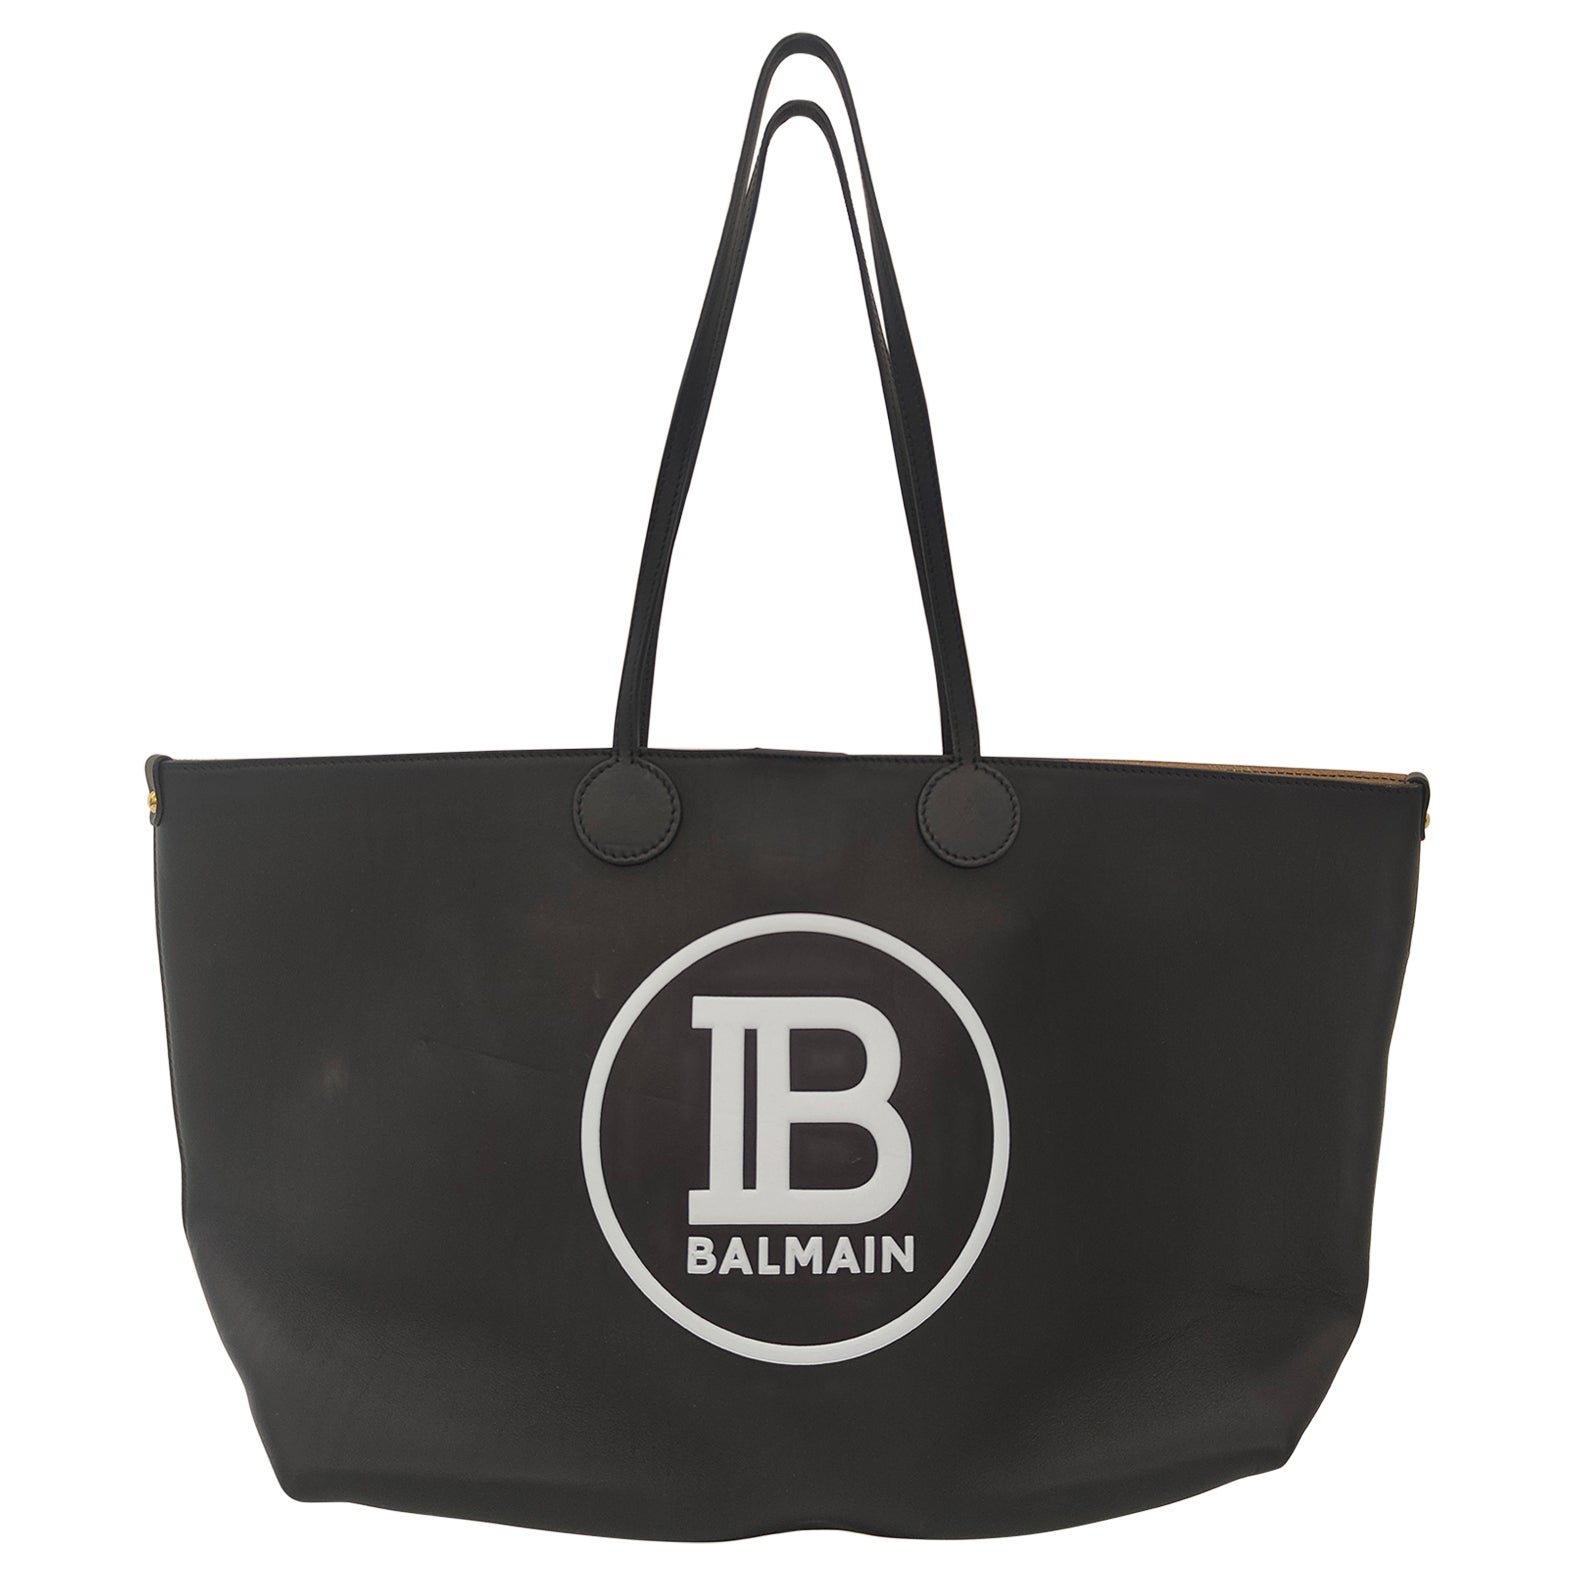 Balmain black leather shopper bag For Sale